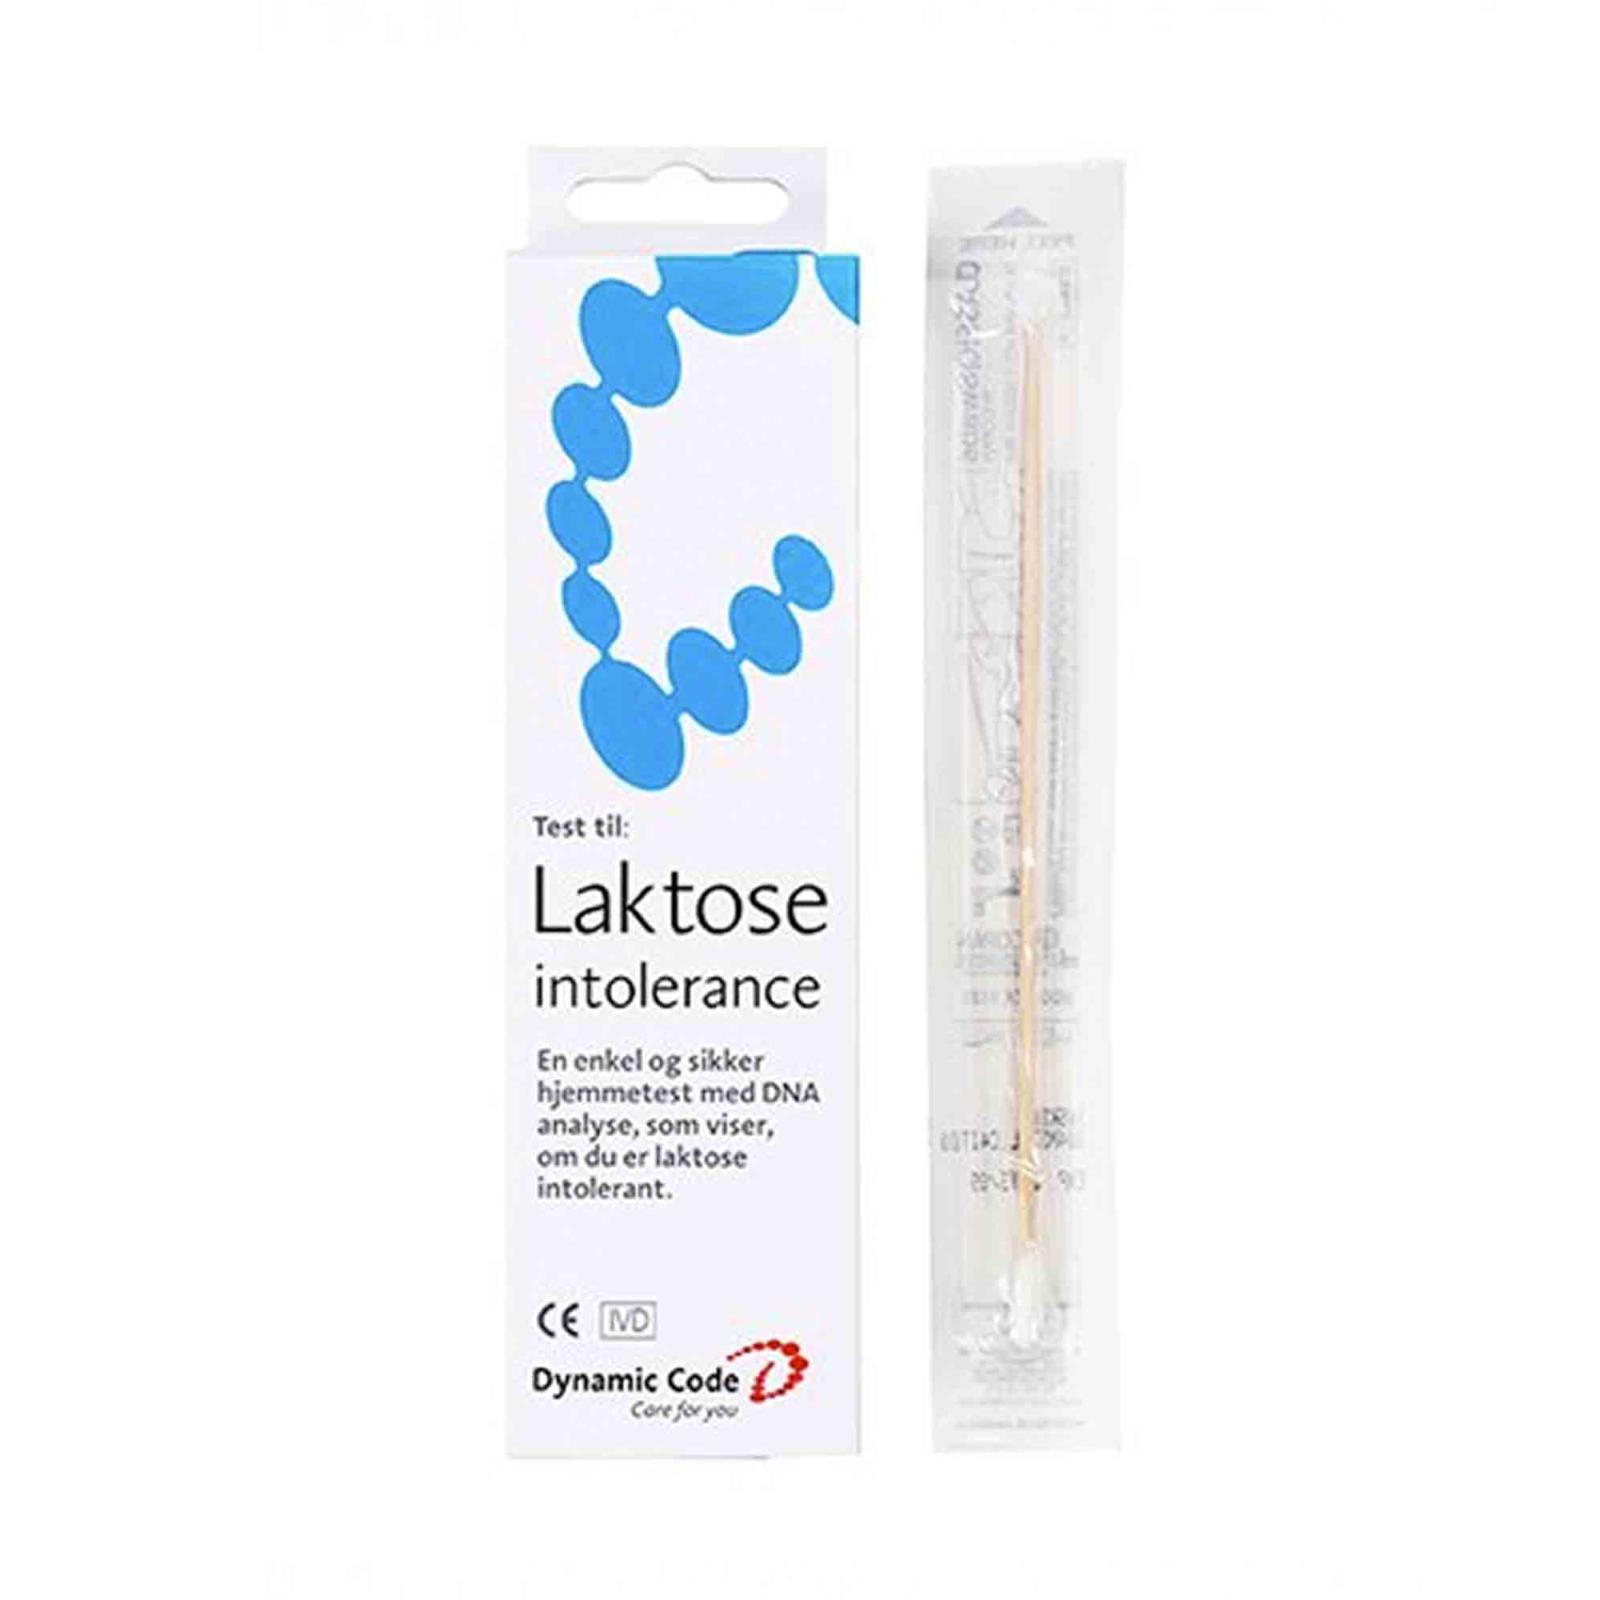 Test for Laktoseintolerans